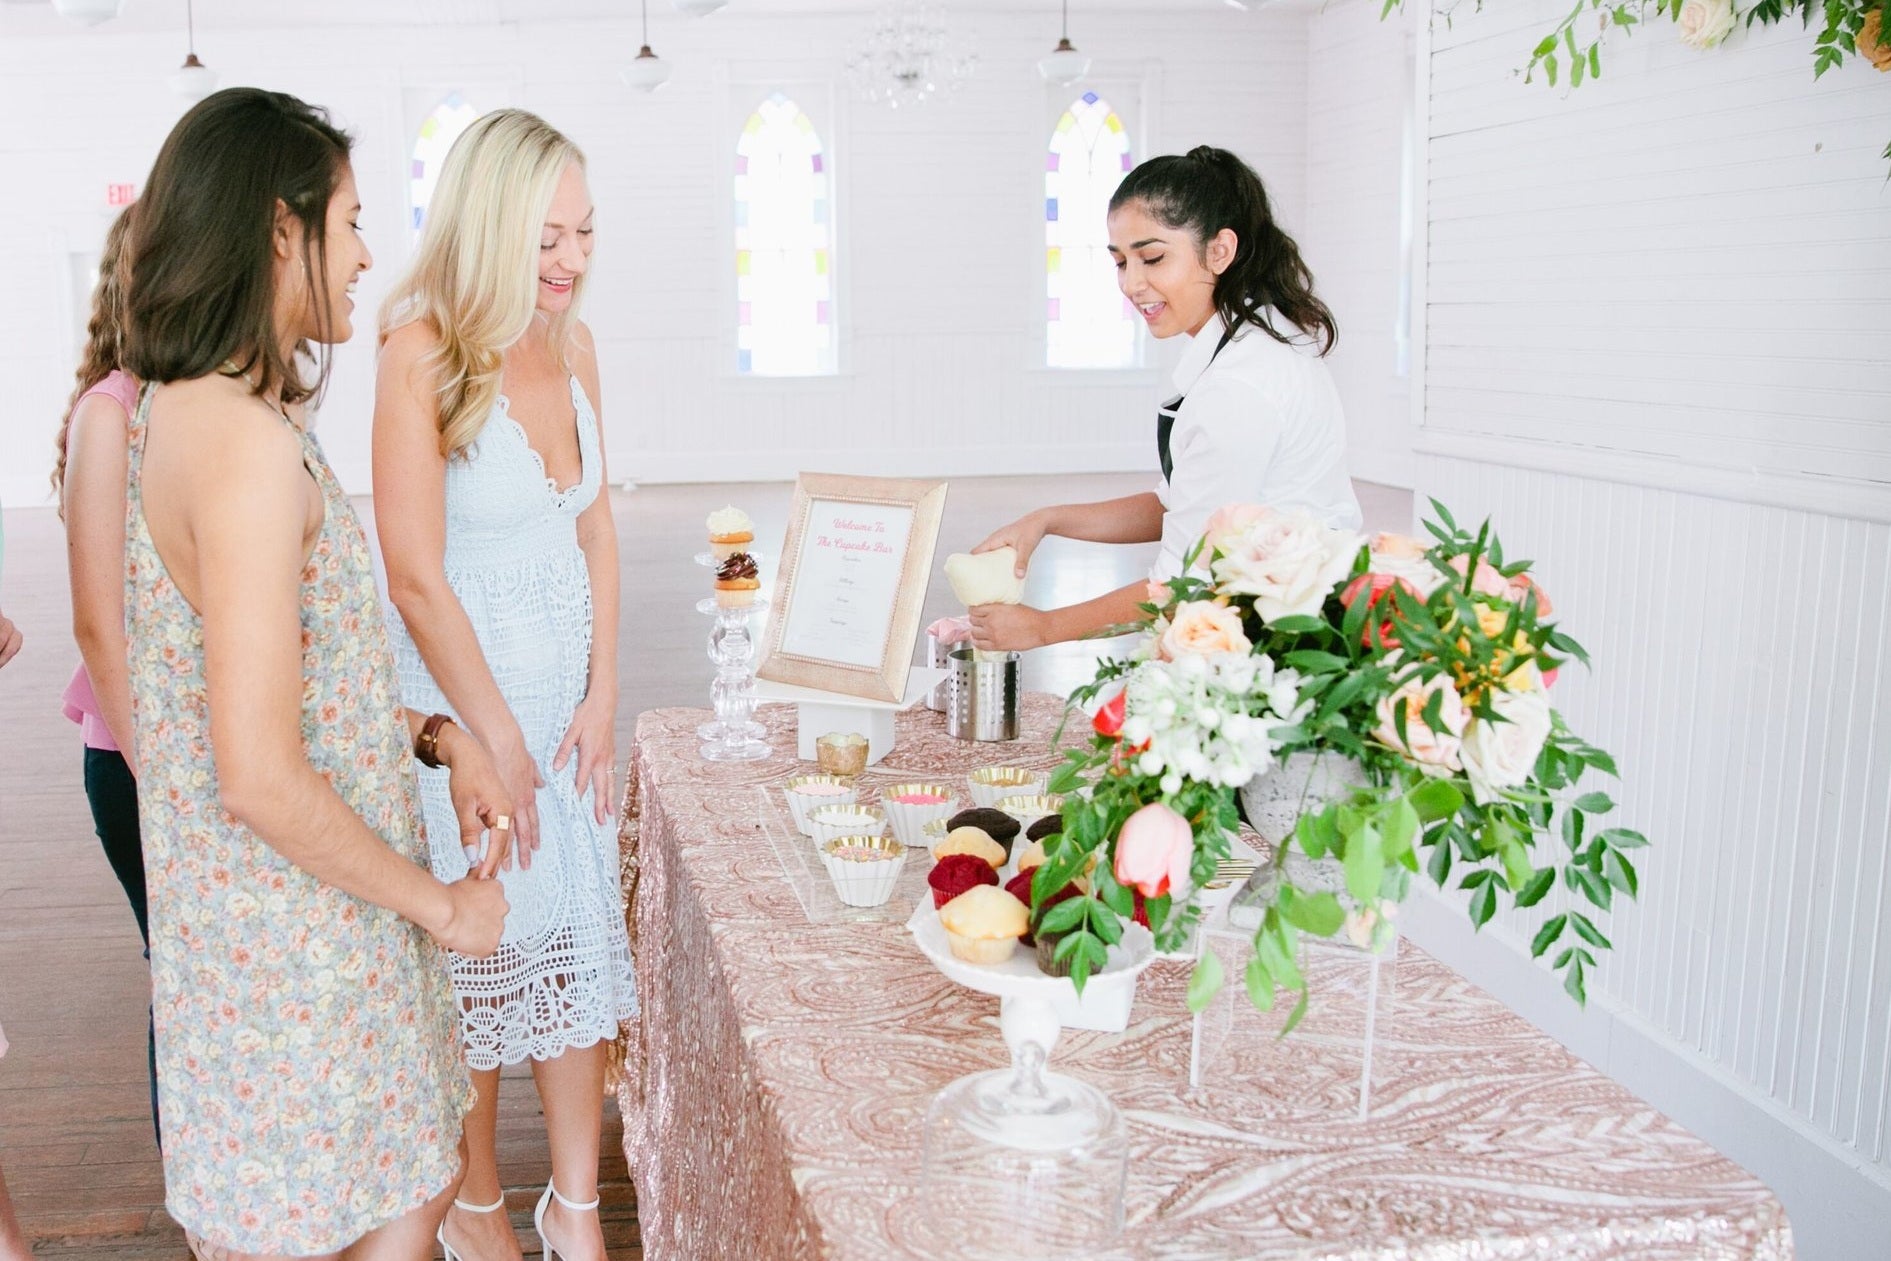 Woman serves custom cupcakes from Cupcake Bar to guests at wedding Austin Texas